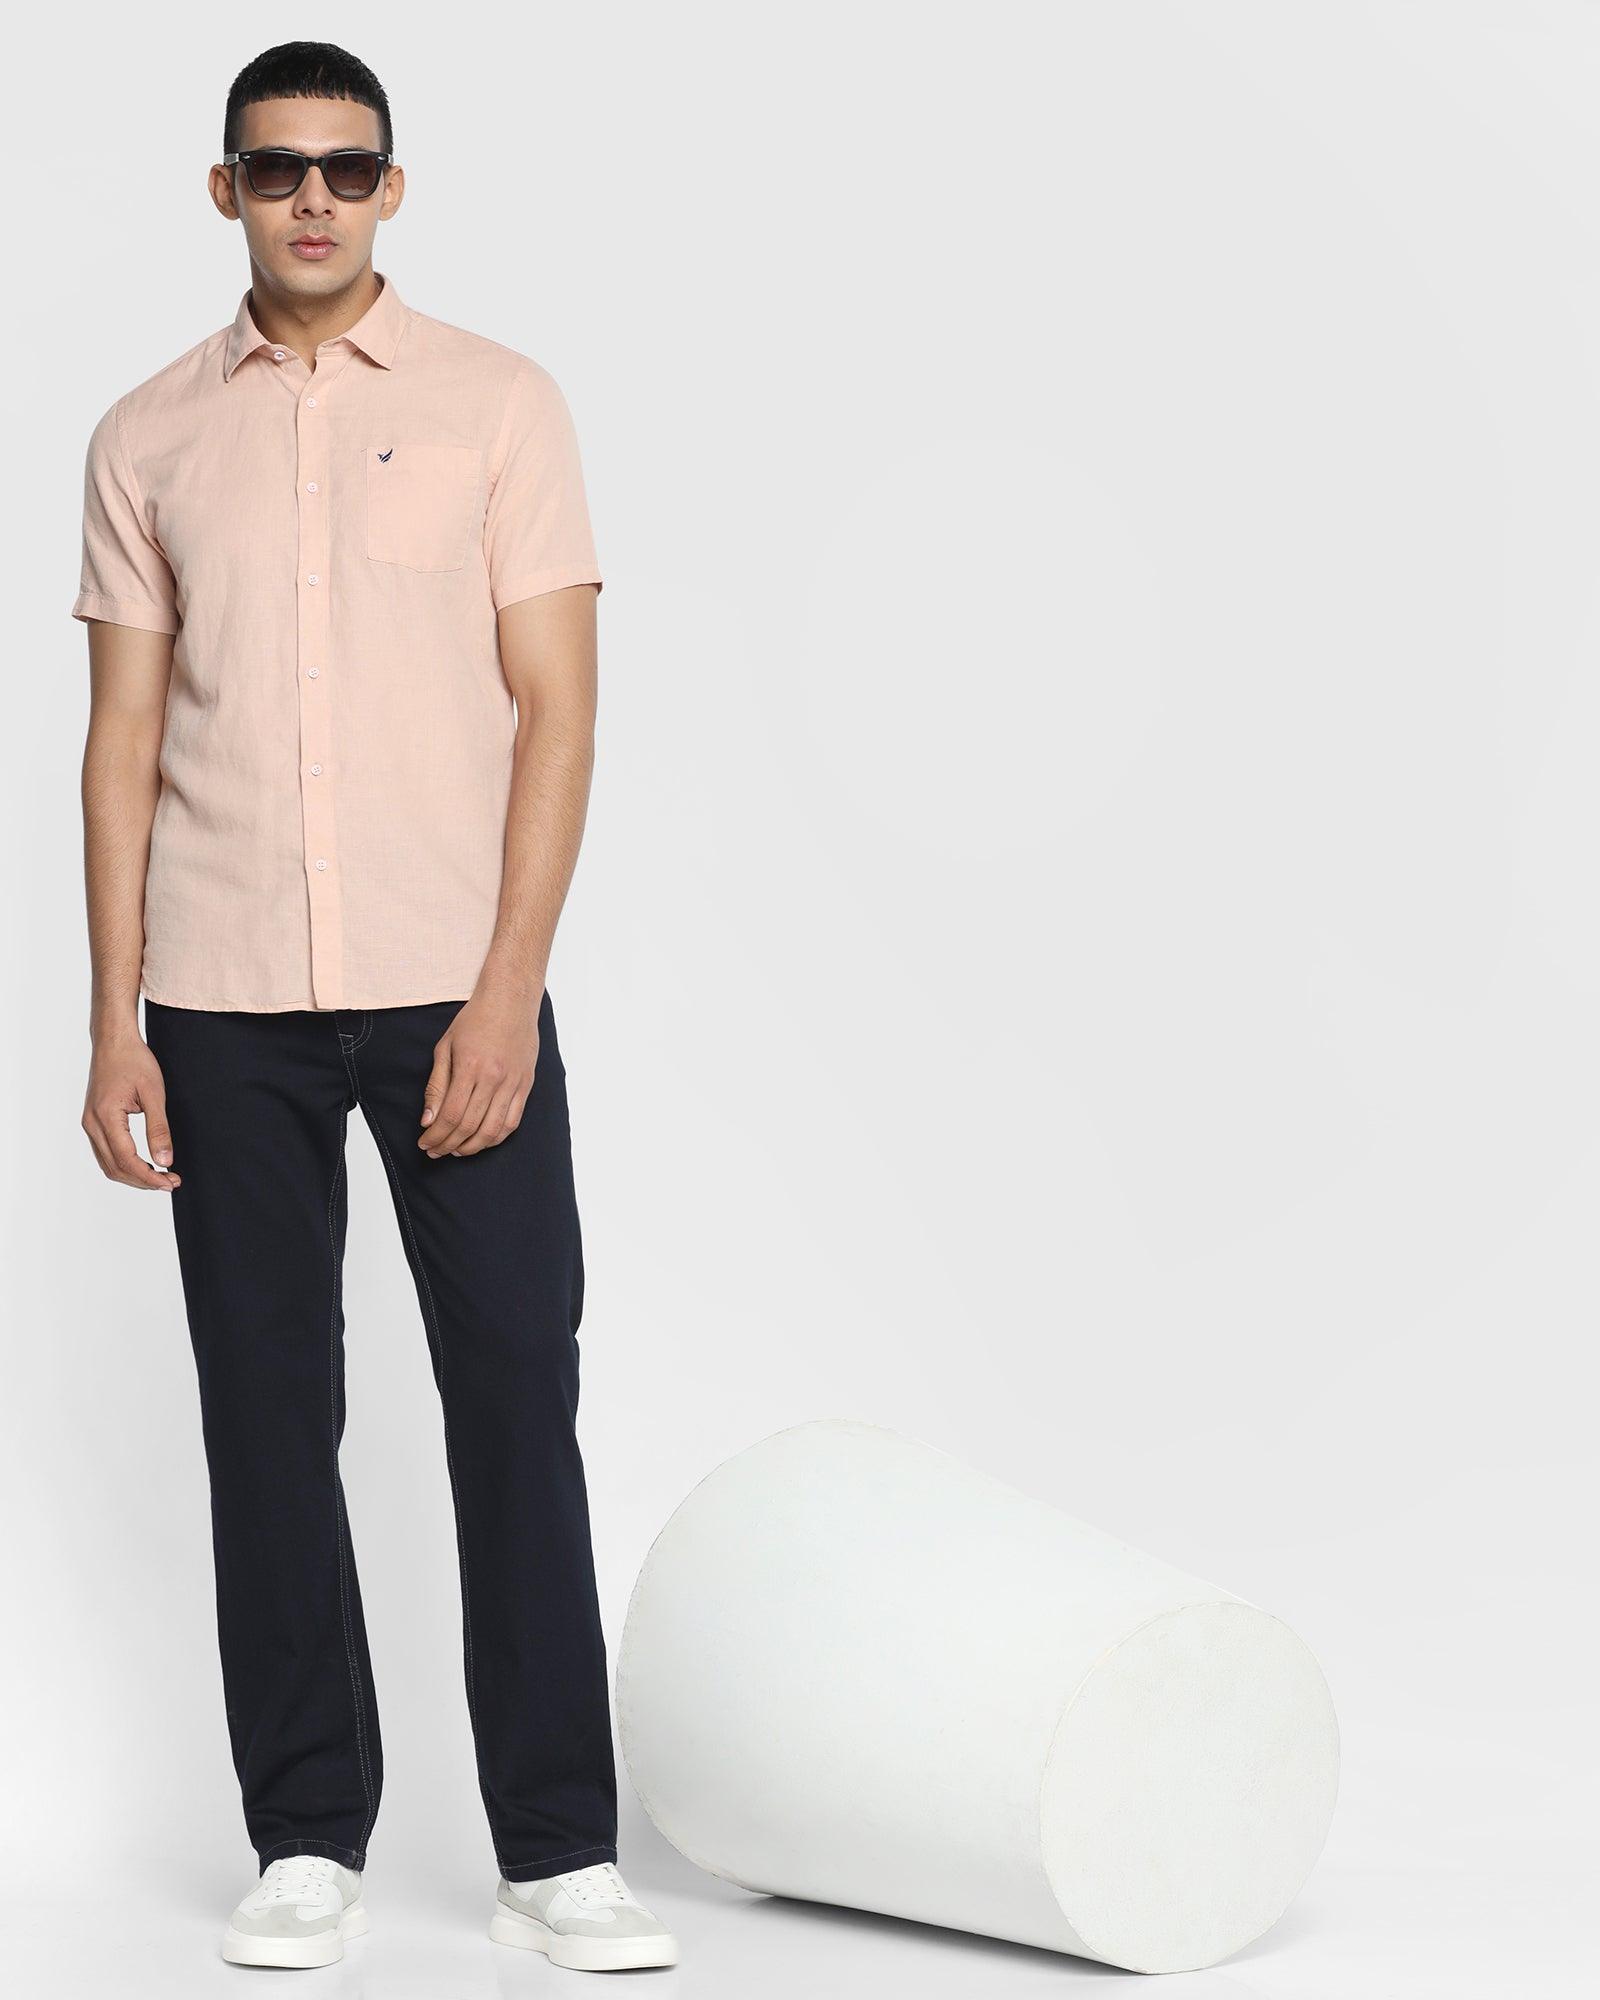 Linen Formal Half Sleeve Peach Solid Shirt - Salmon